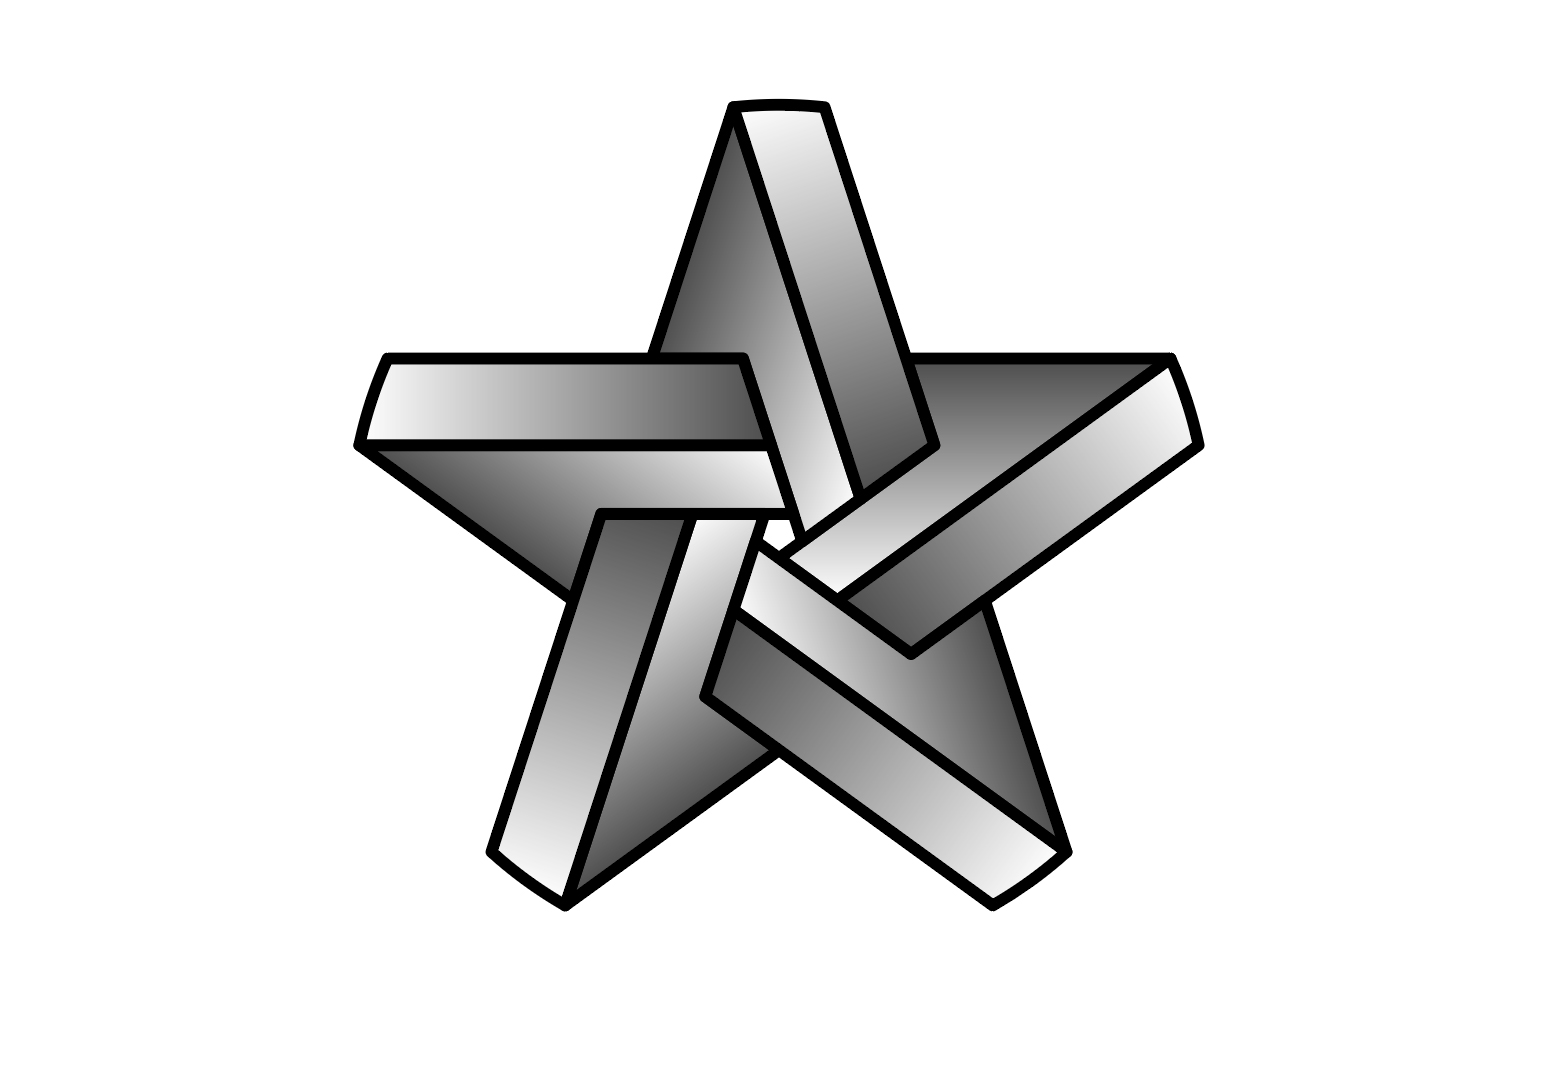 A interwoven 3D star in Adobe Illustrator